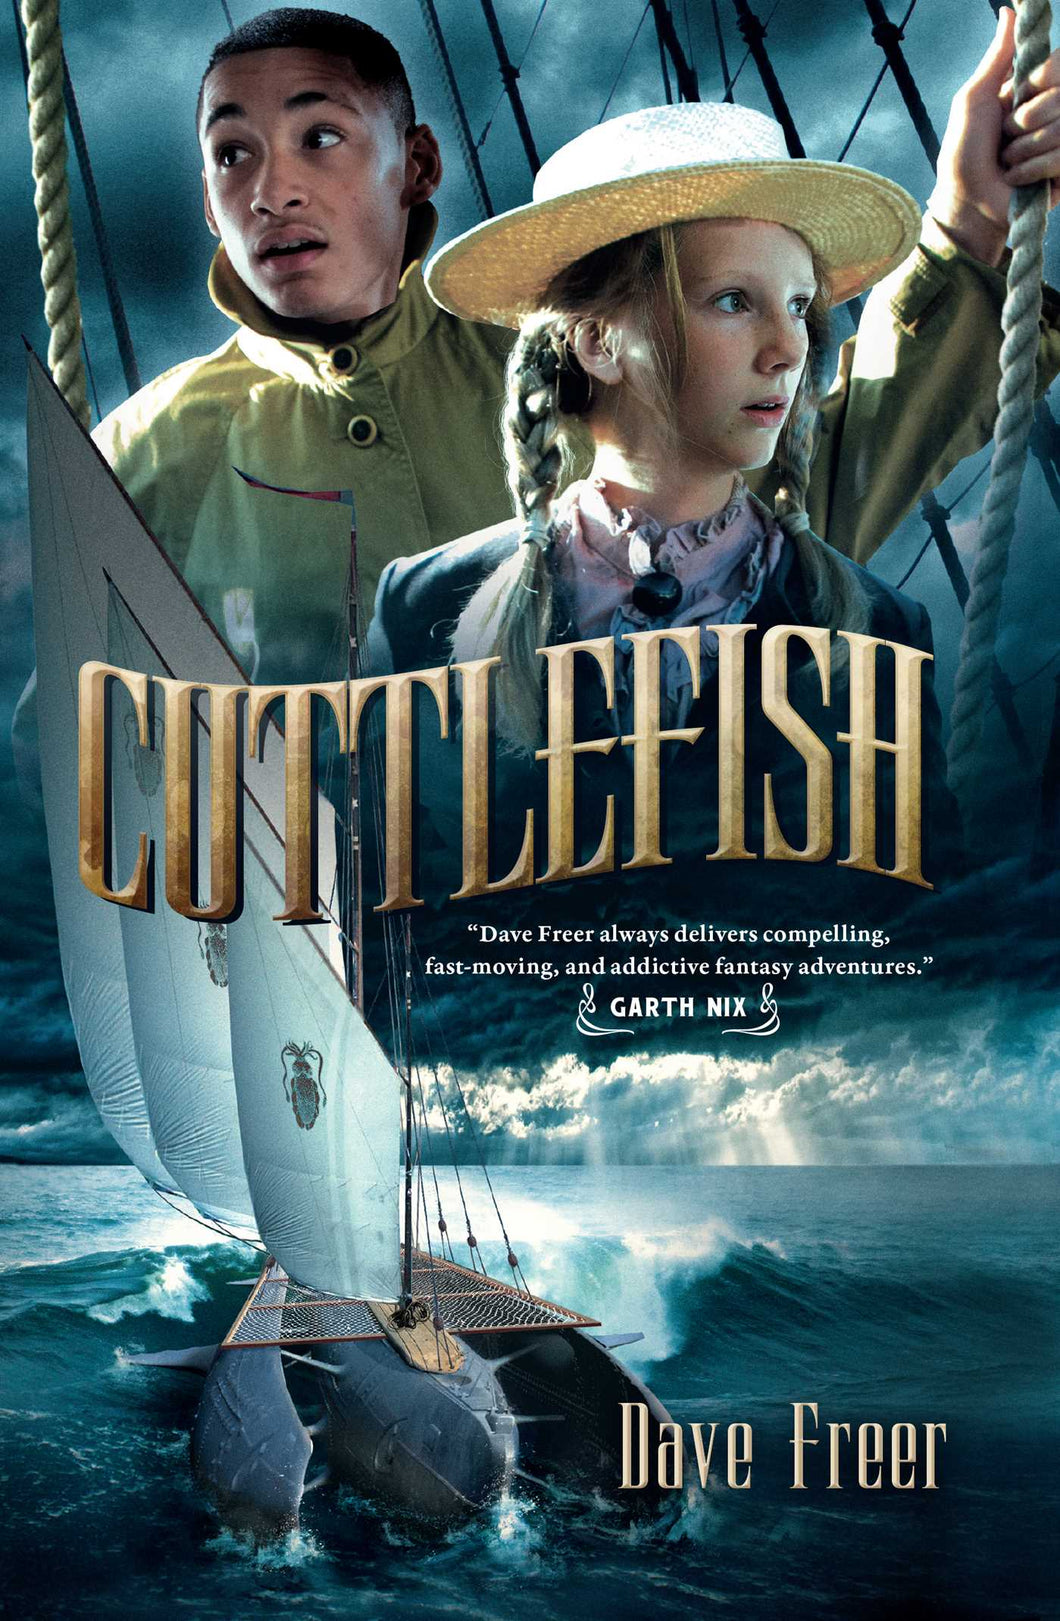 Cuttlefish